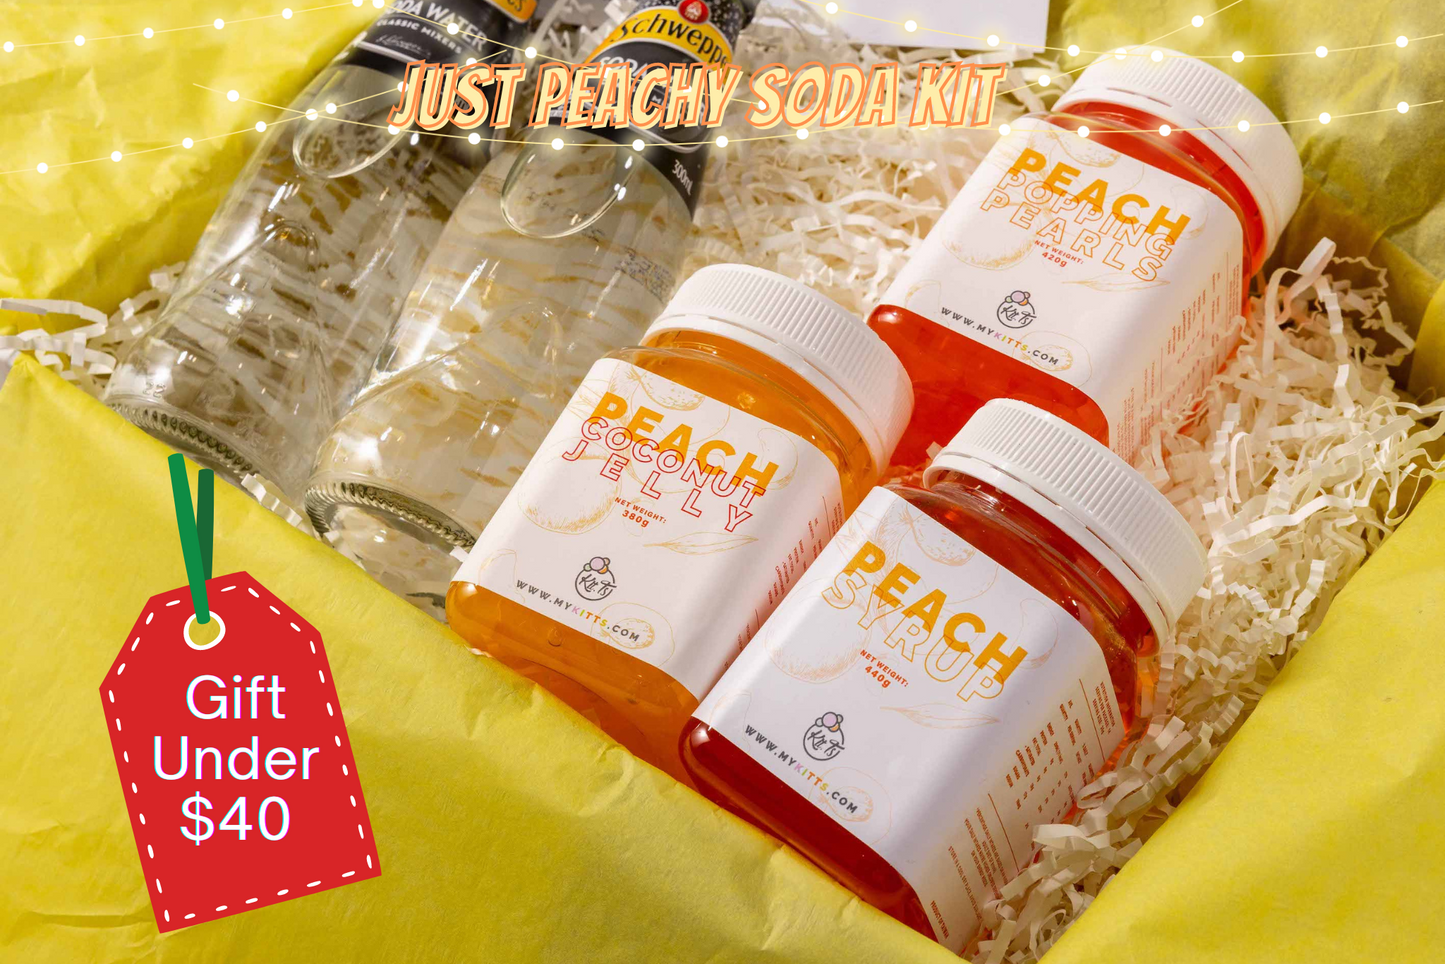 Just Peachy Soda Kit